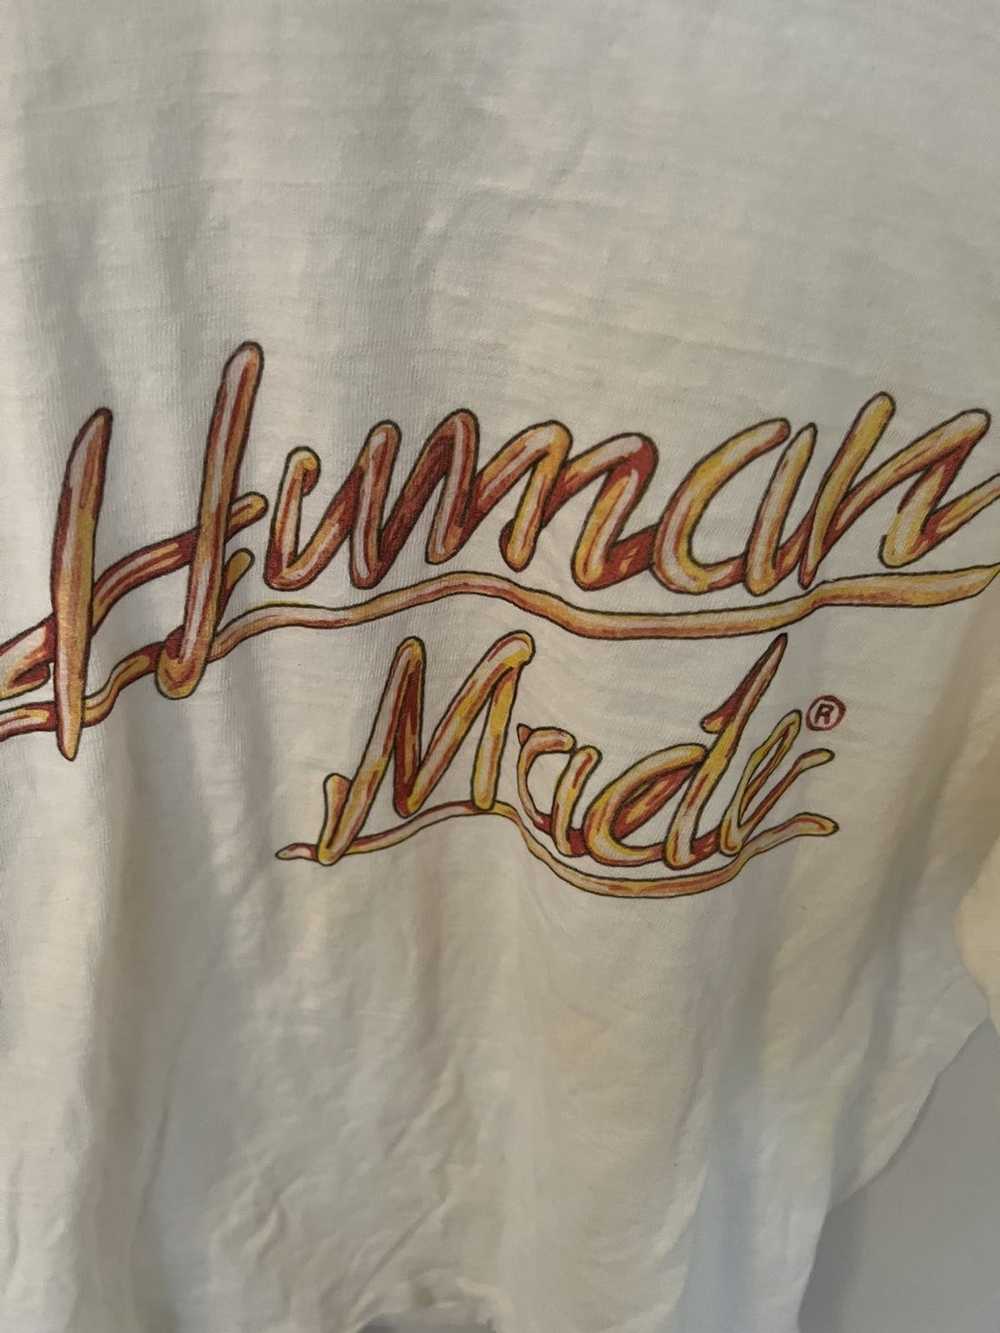 Human Made – Service and Supply T-Shirt